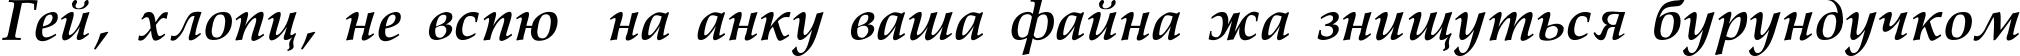 Пример написания шрифтом Palatino-Bold-Italic текста на украинском